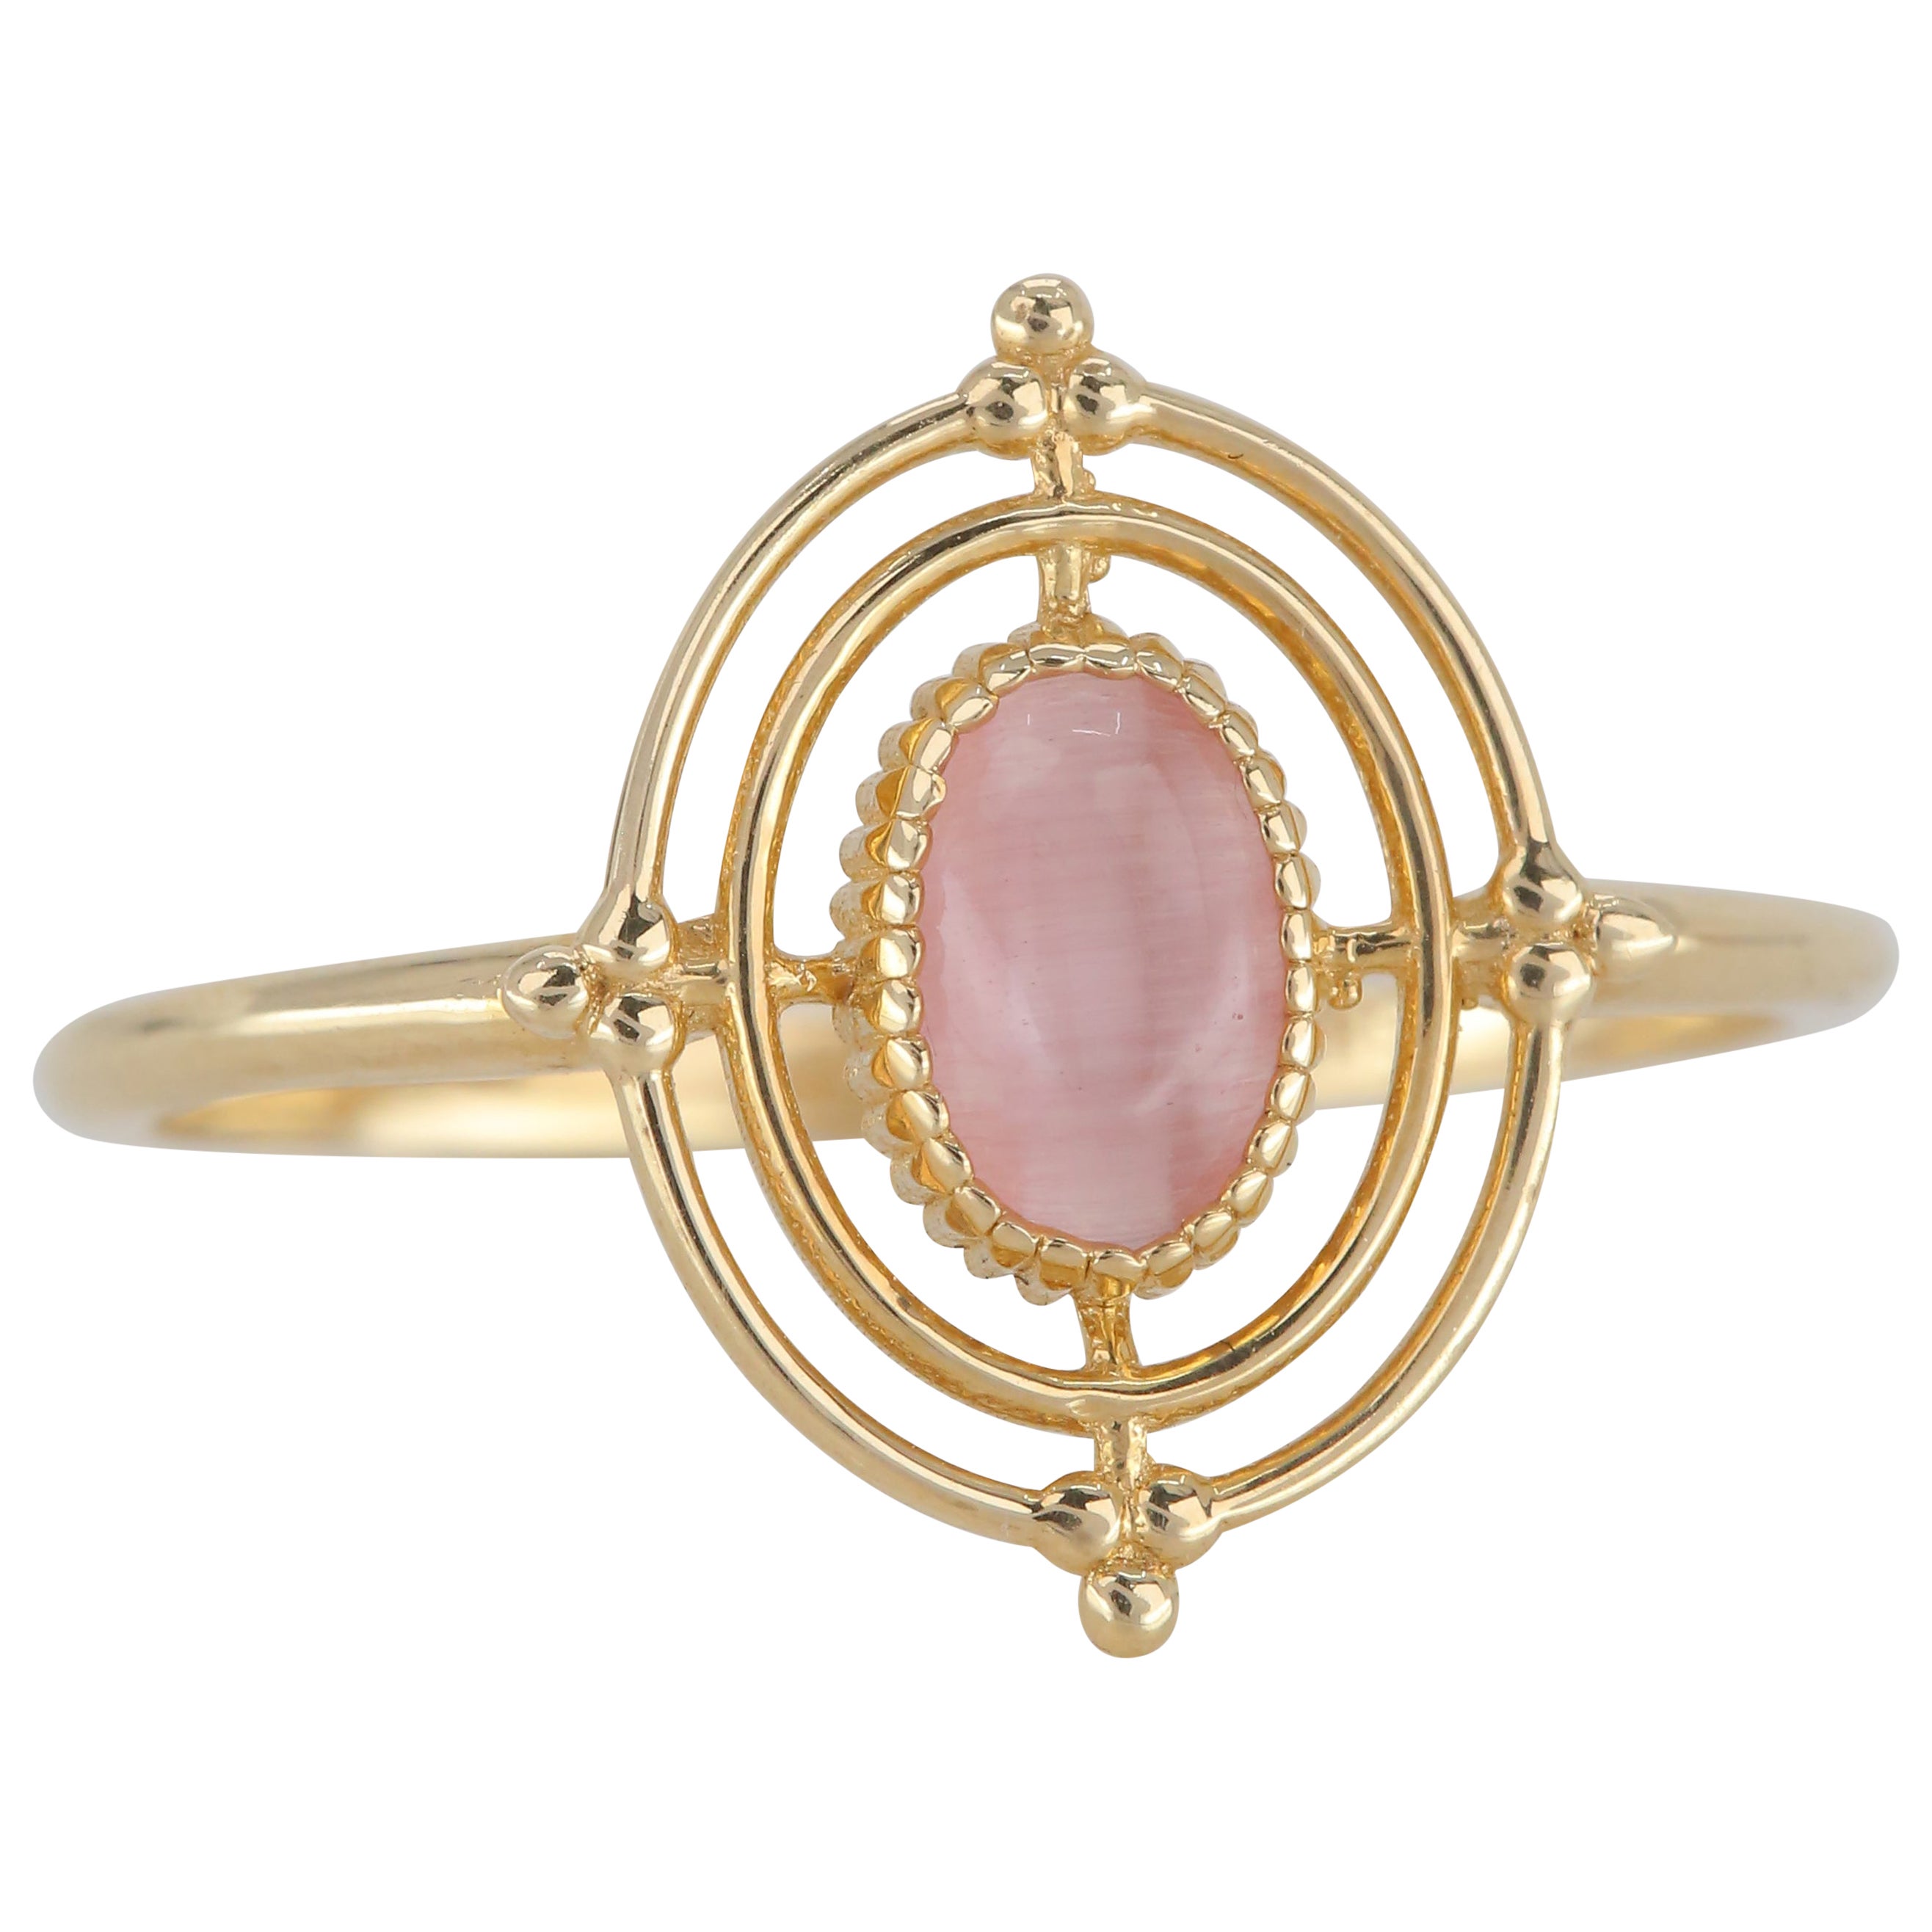 For Sale:  14K Gold Vintage Style Oval Cut Pink Quartz Ring